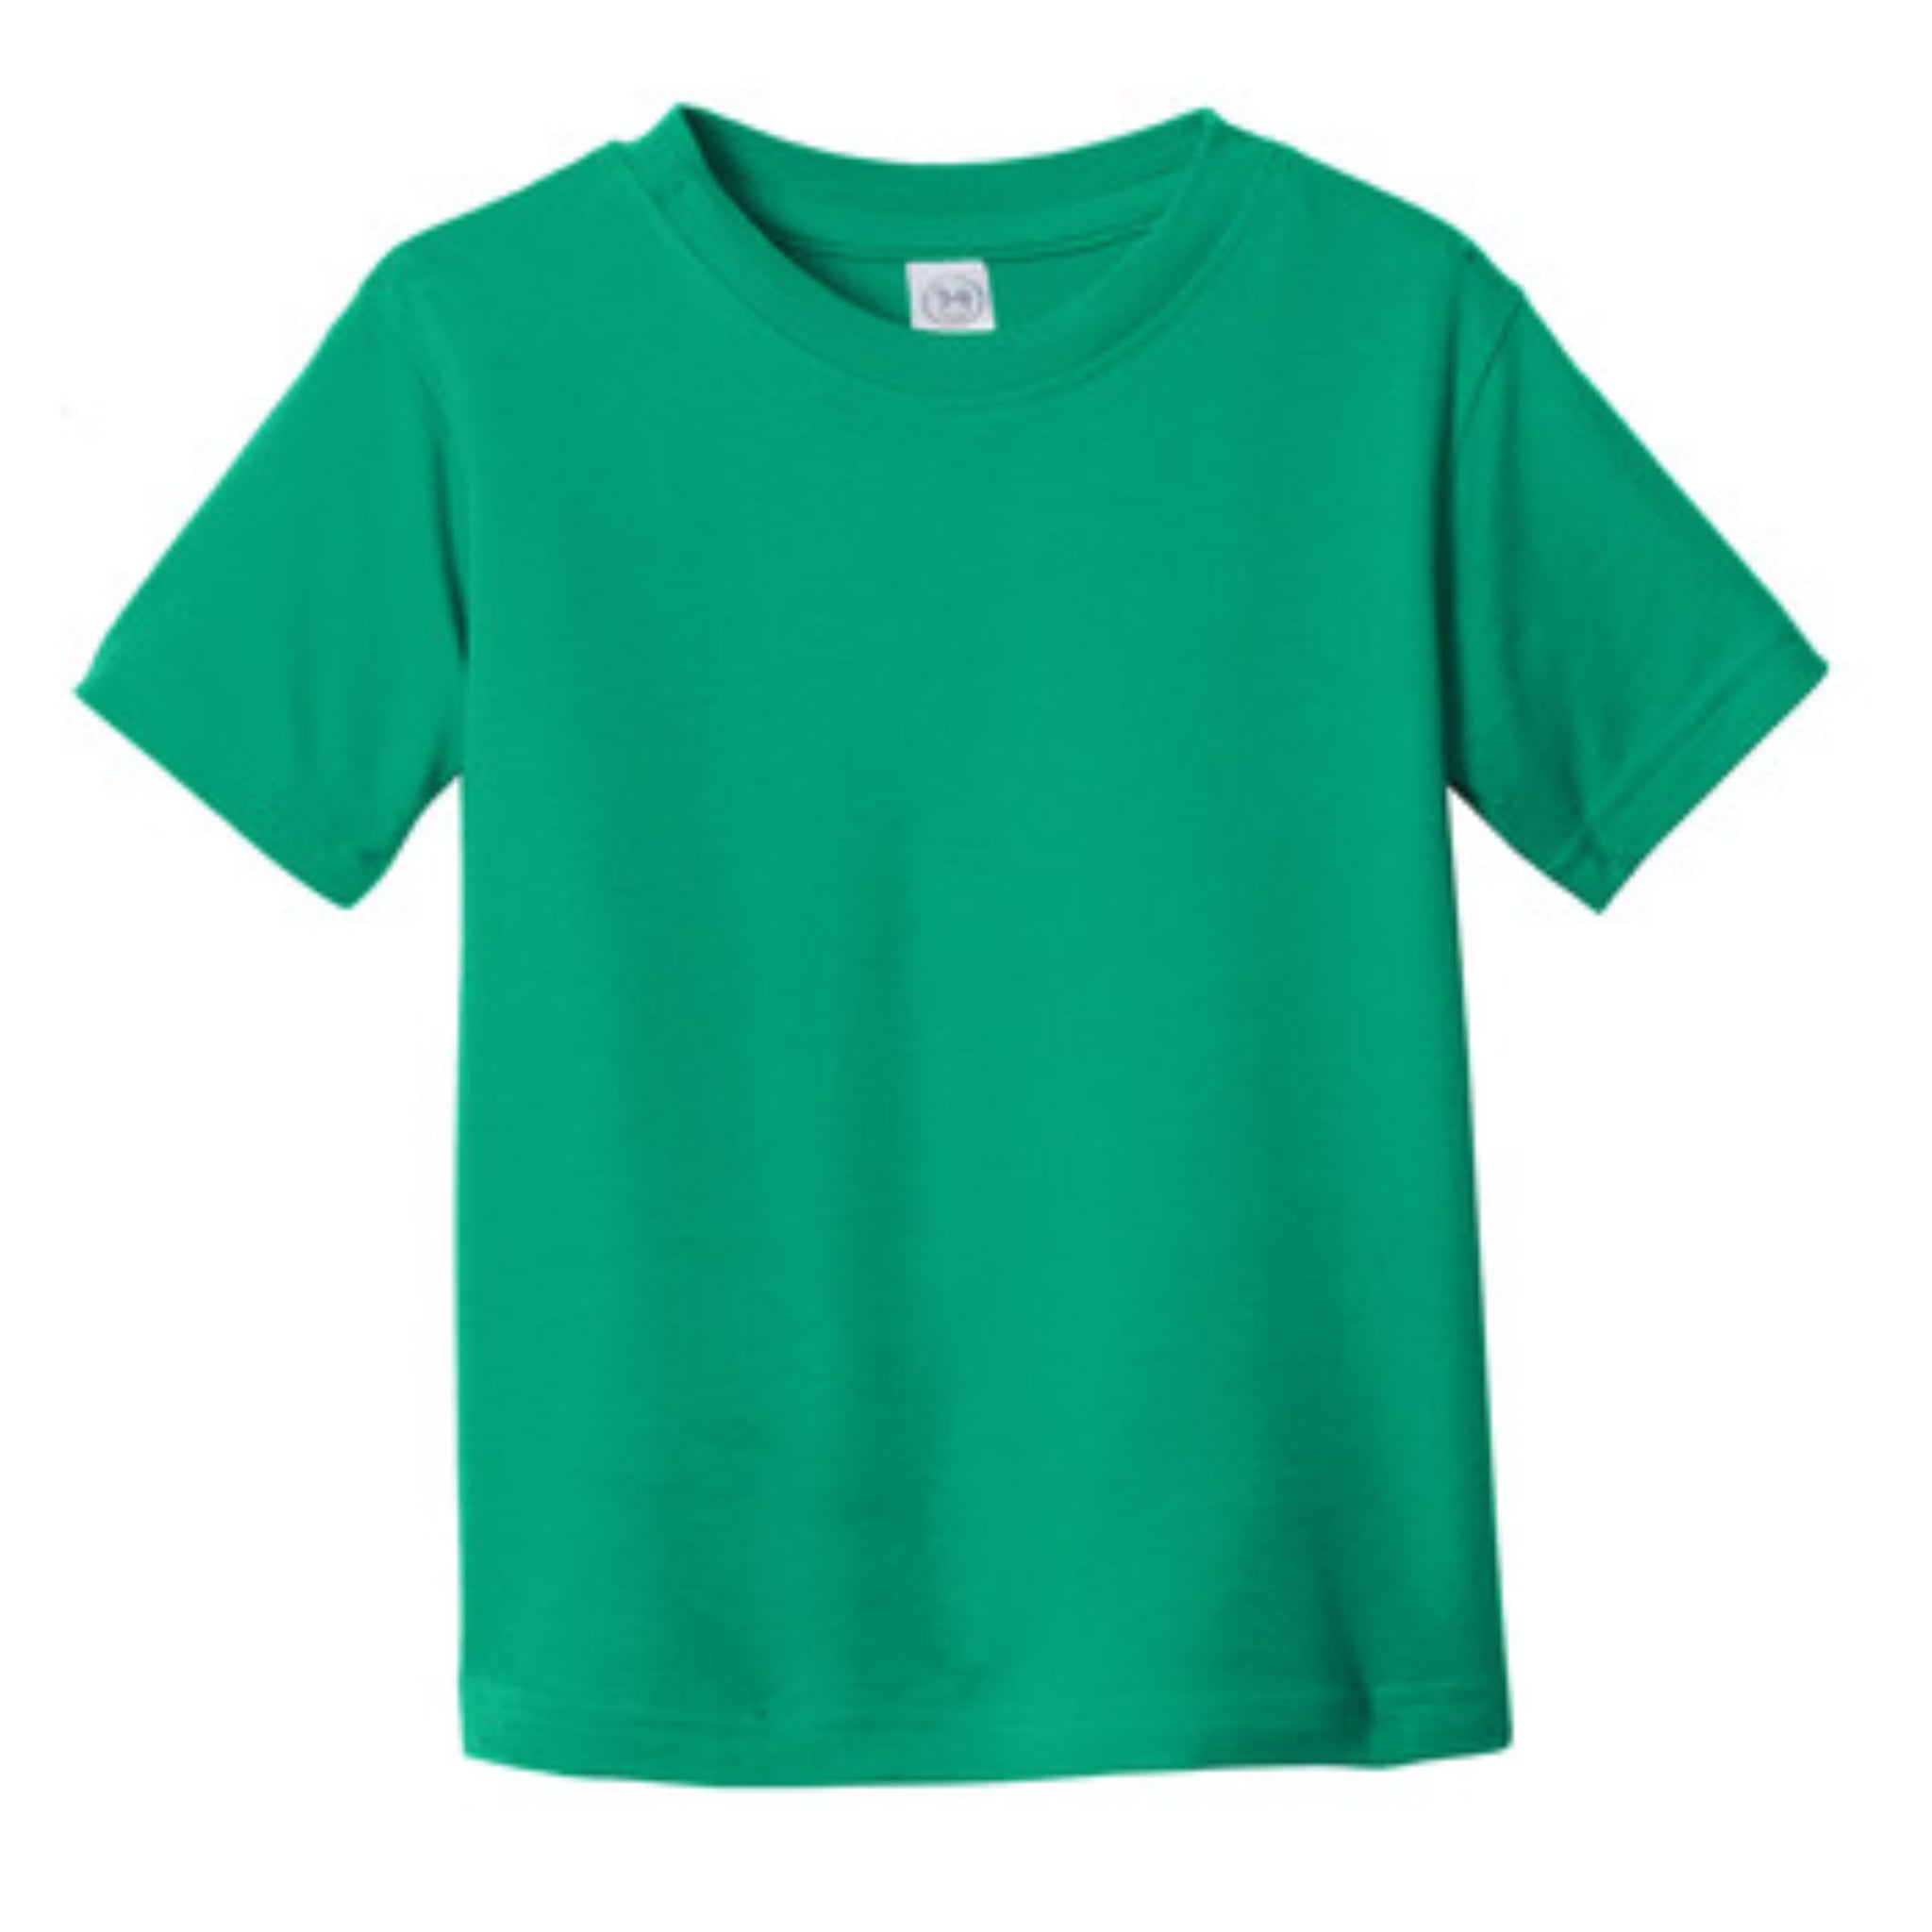 Green Short Sleeved Shirt - Smocked South